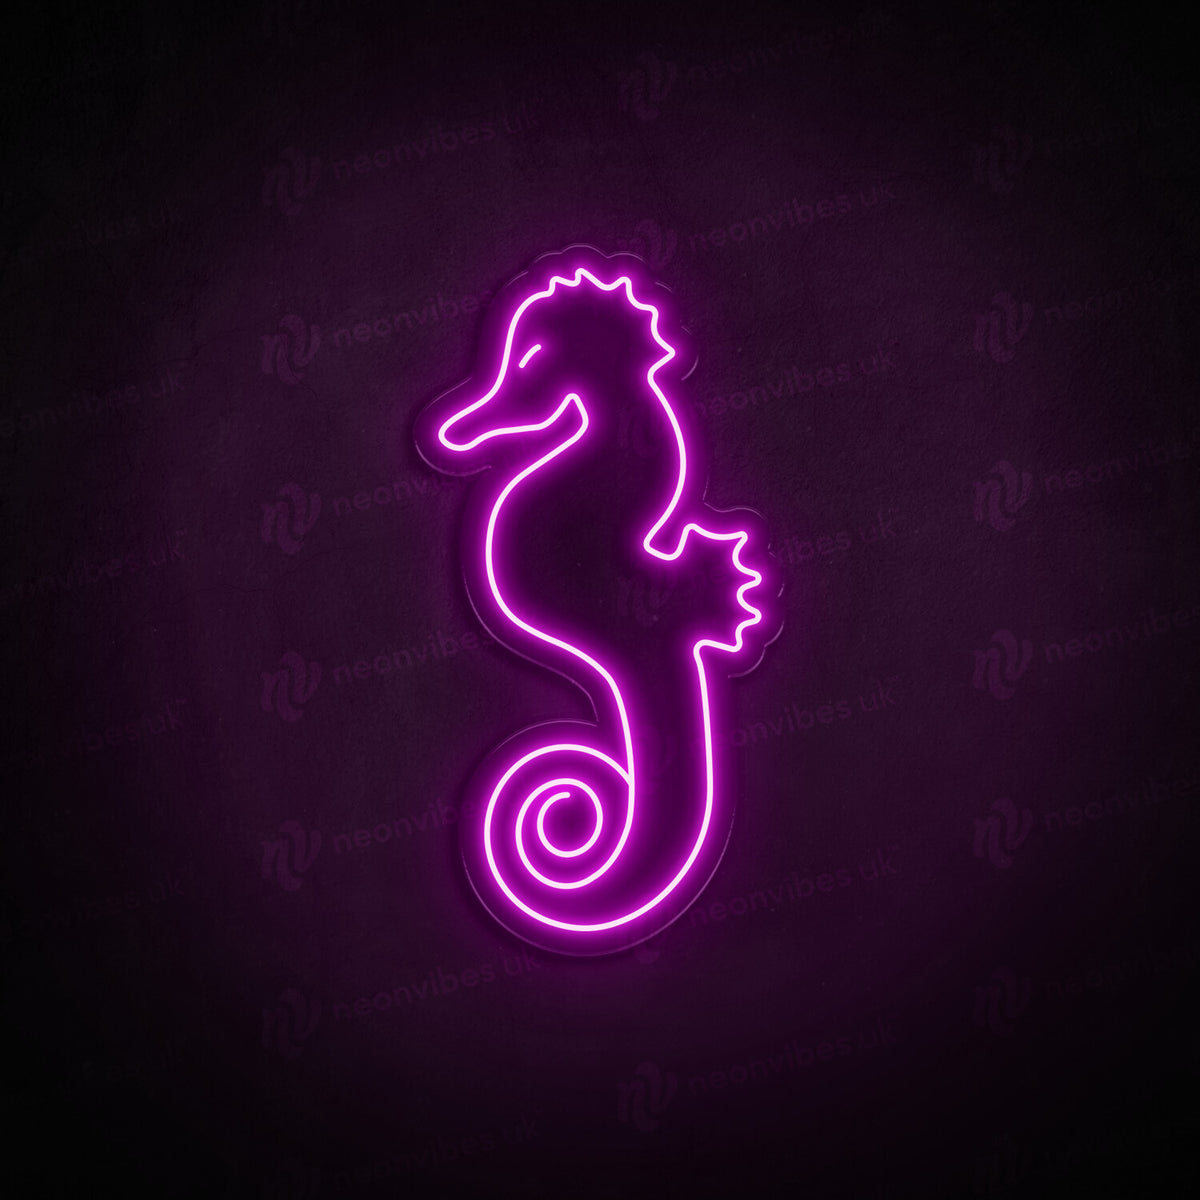 Seahorse neon sign